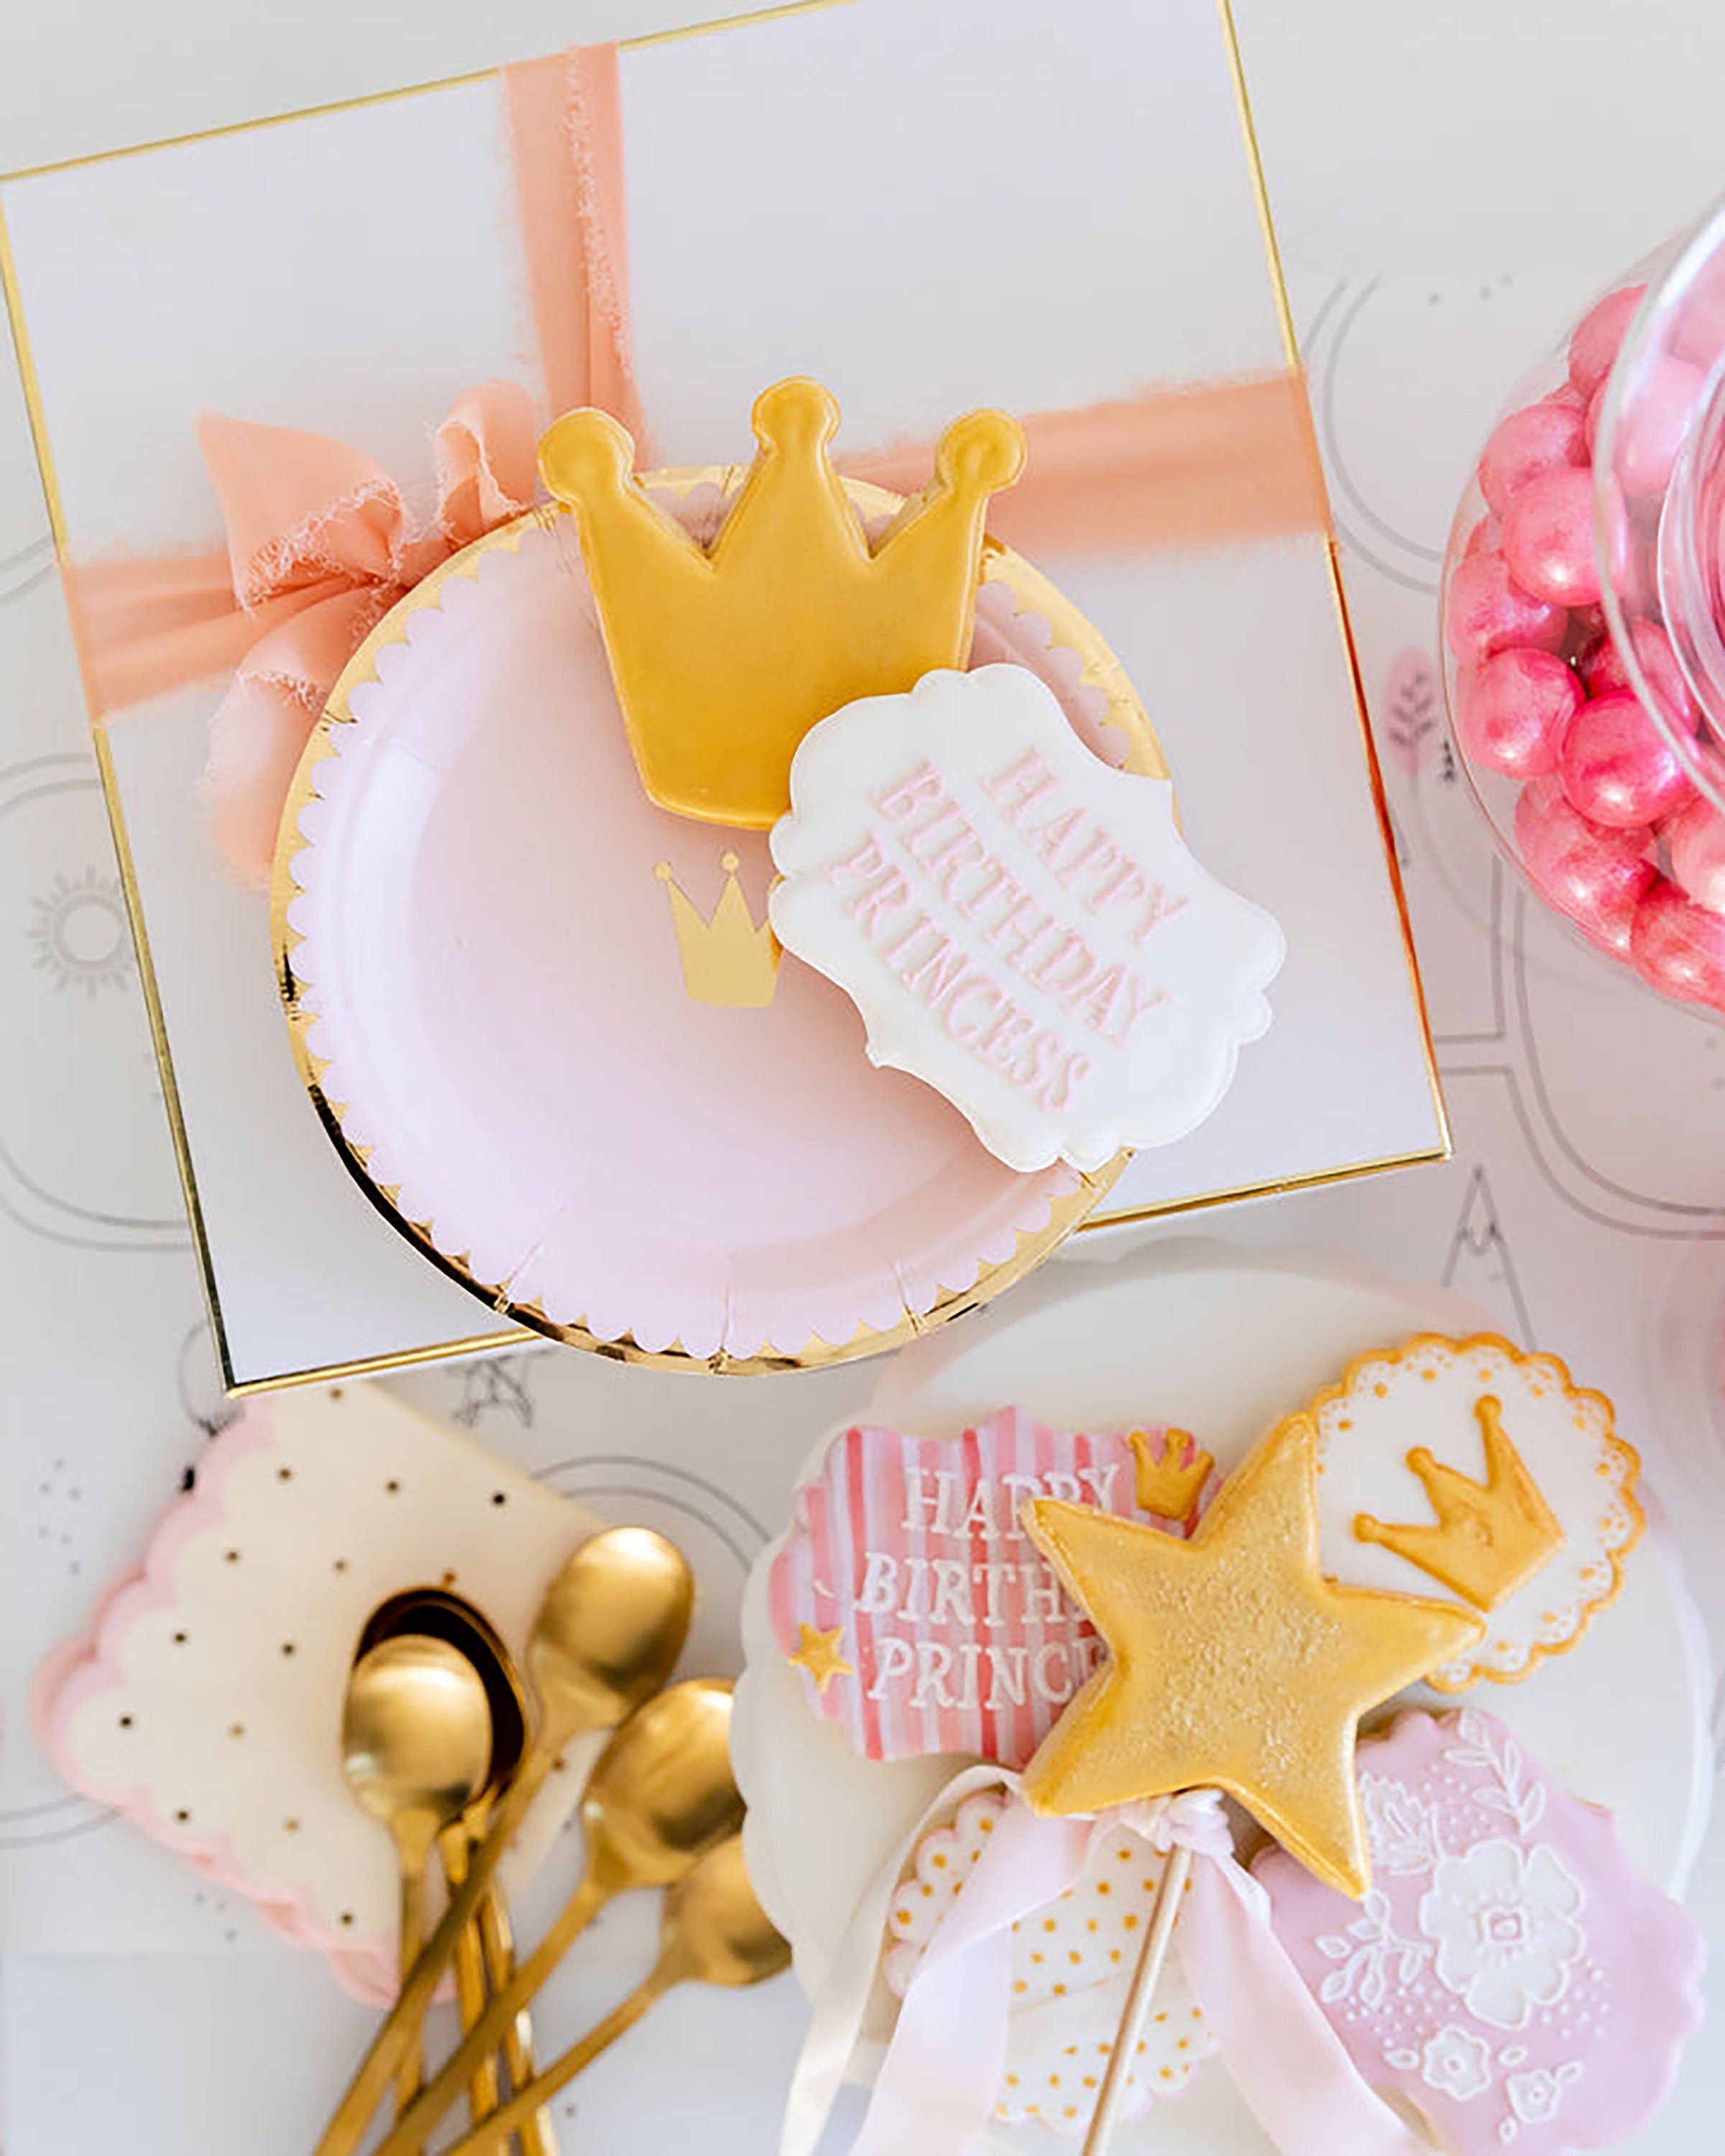 Princess Banners | Princess Party Decor - Crown Banner - Pom Pom Garland - Princess Birthday - Princess Tea Party - Princess Baby Shower